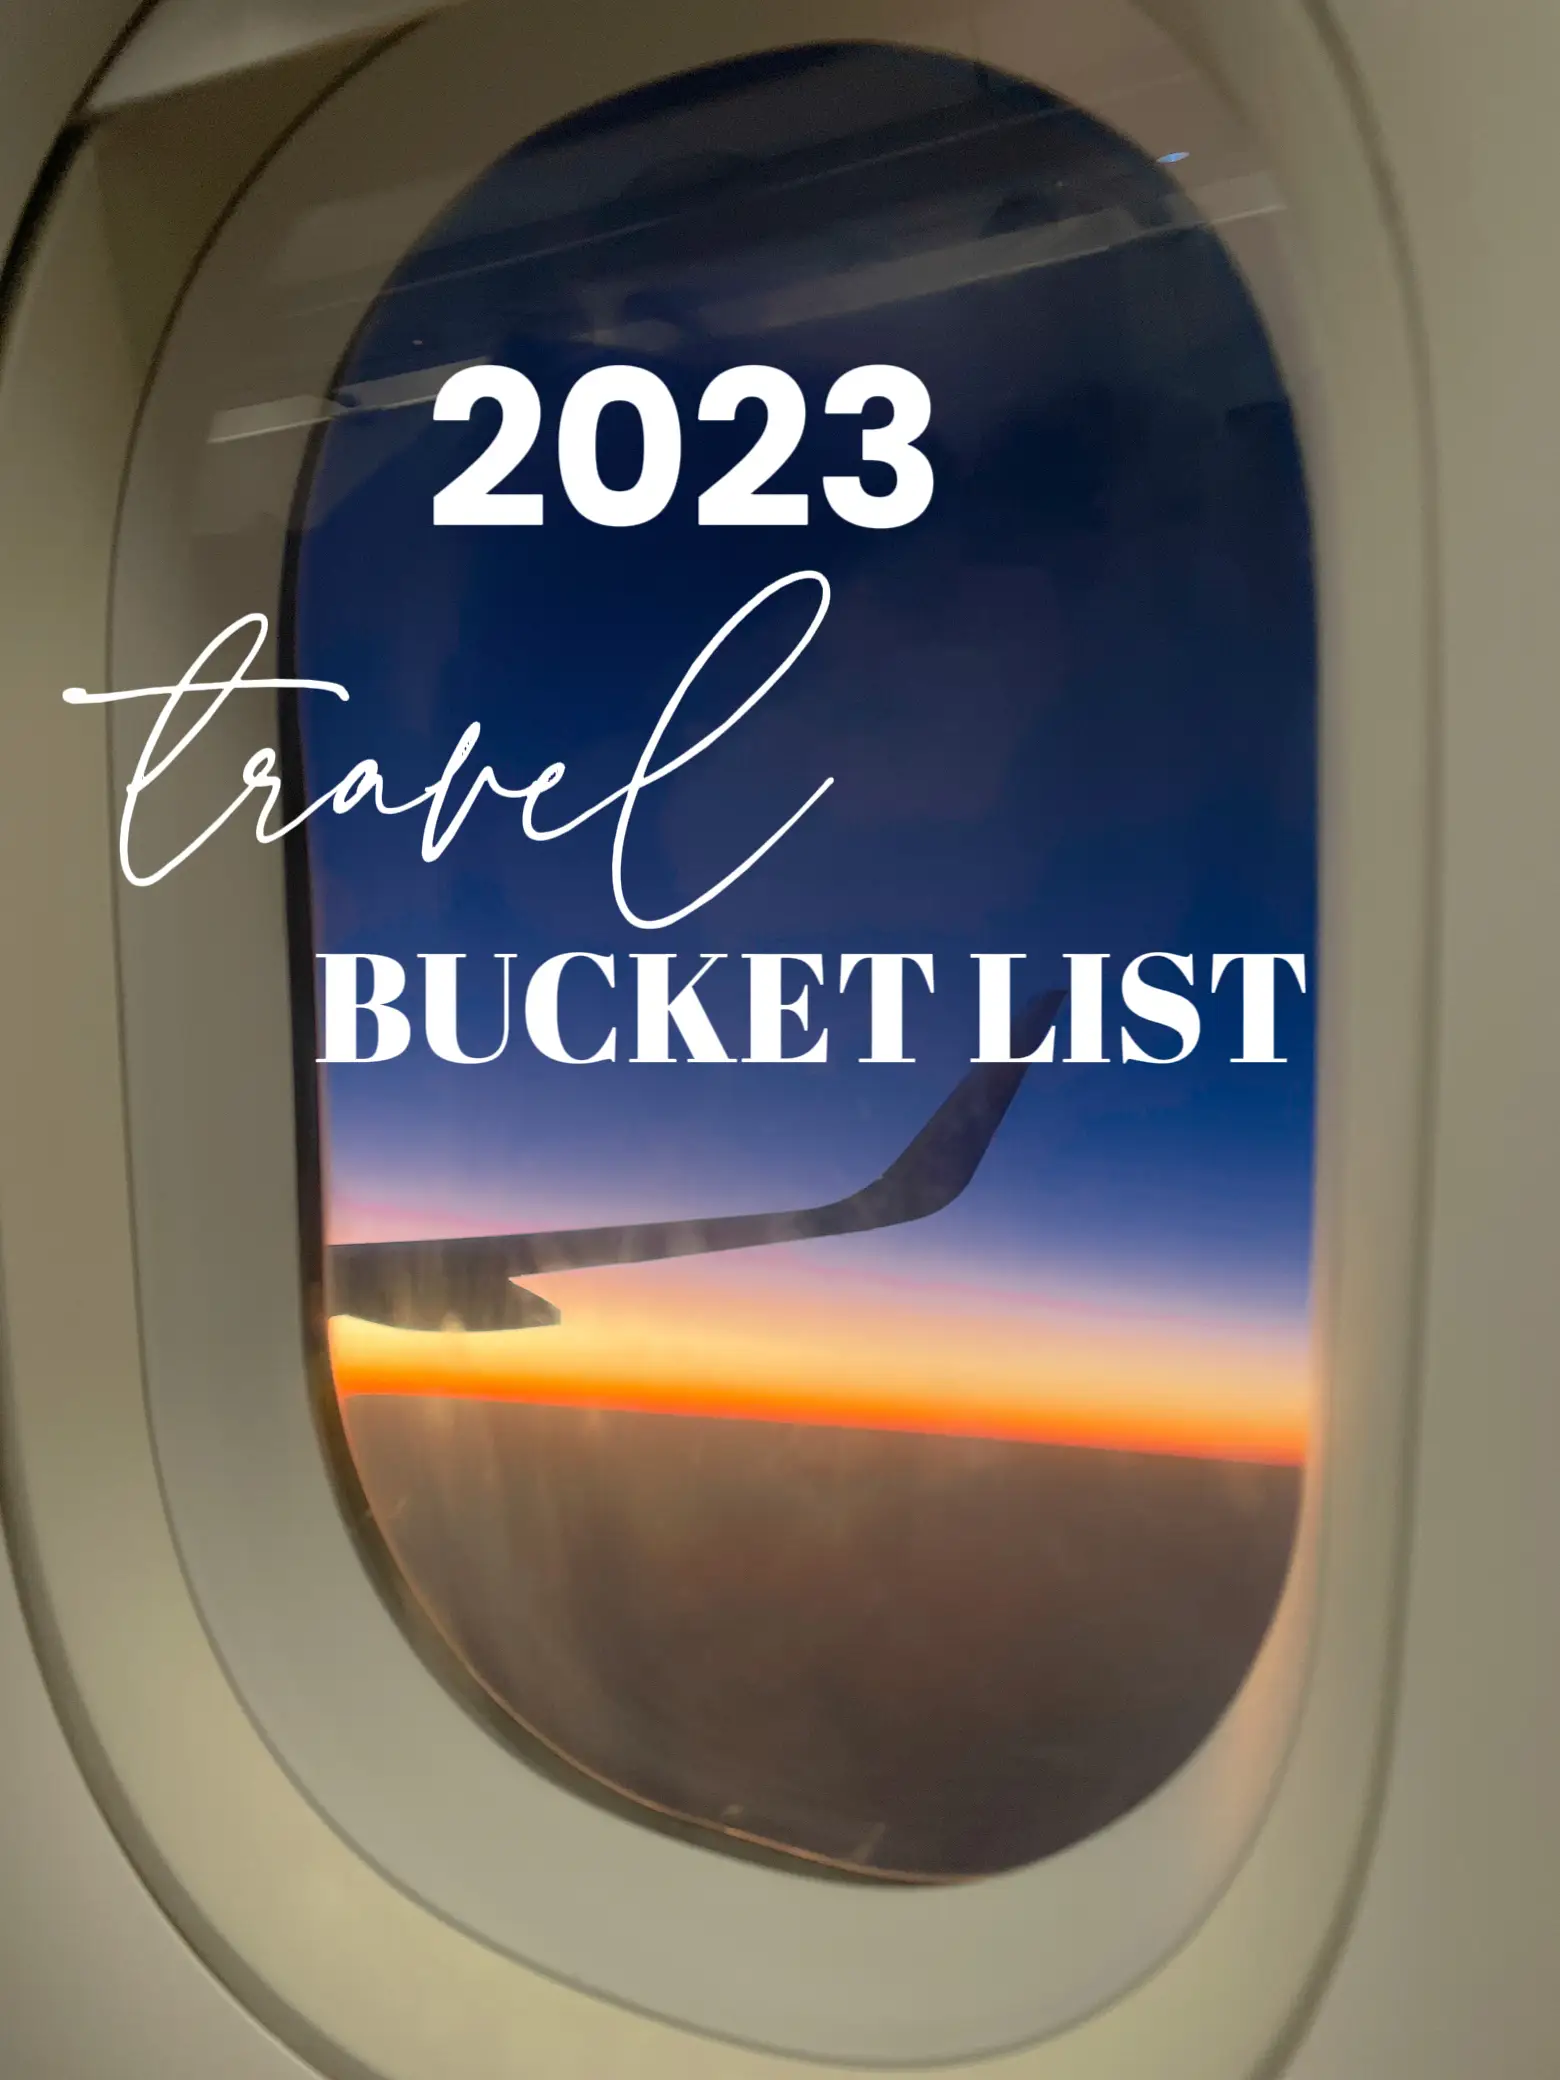 The travel bucket list of 2023